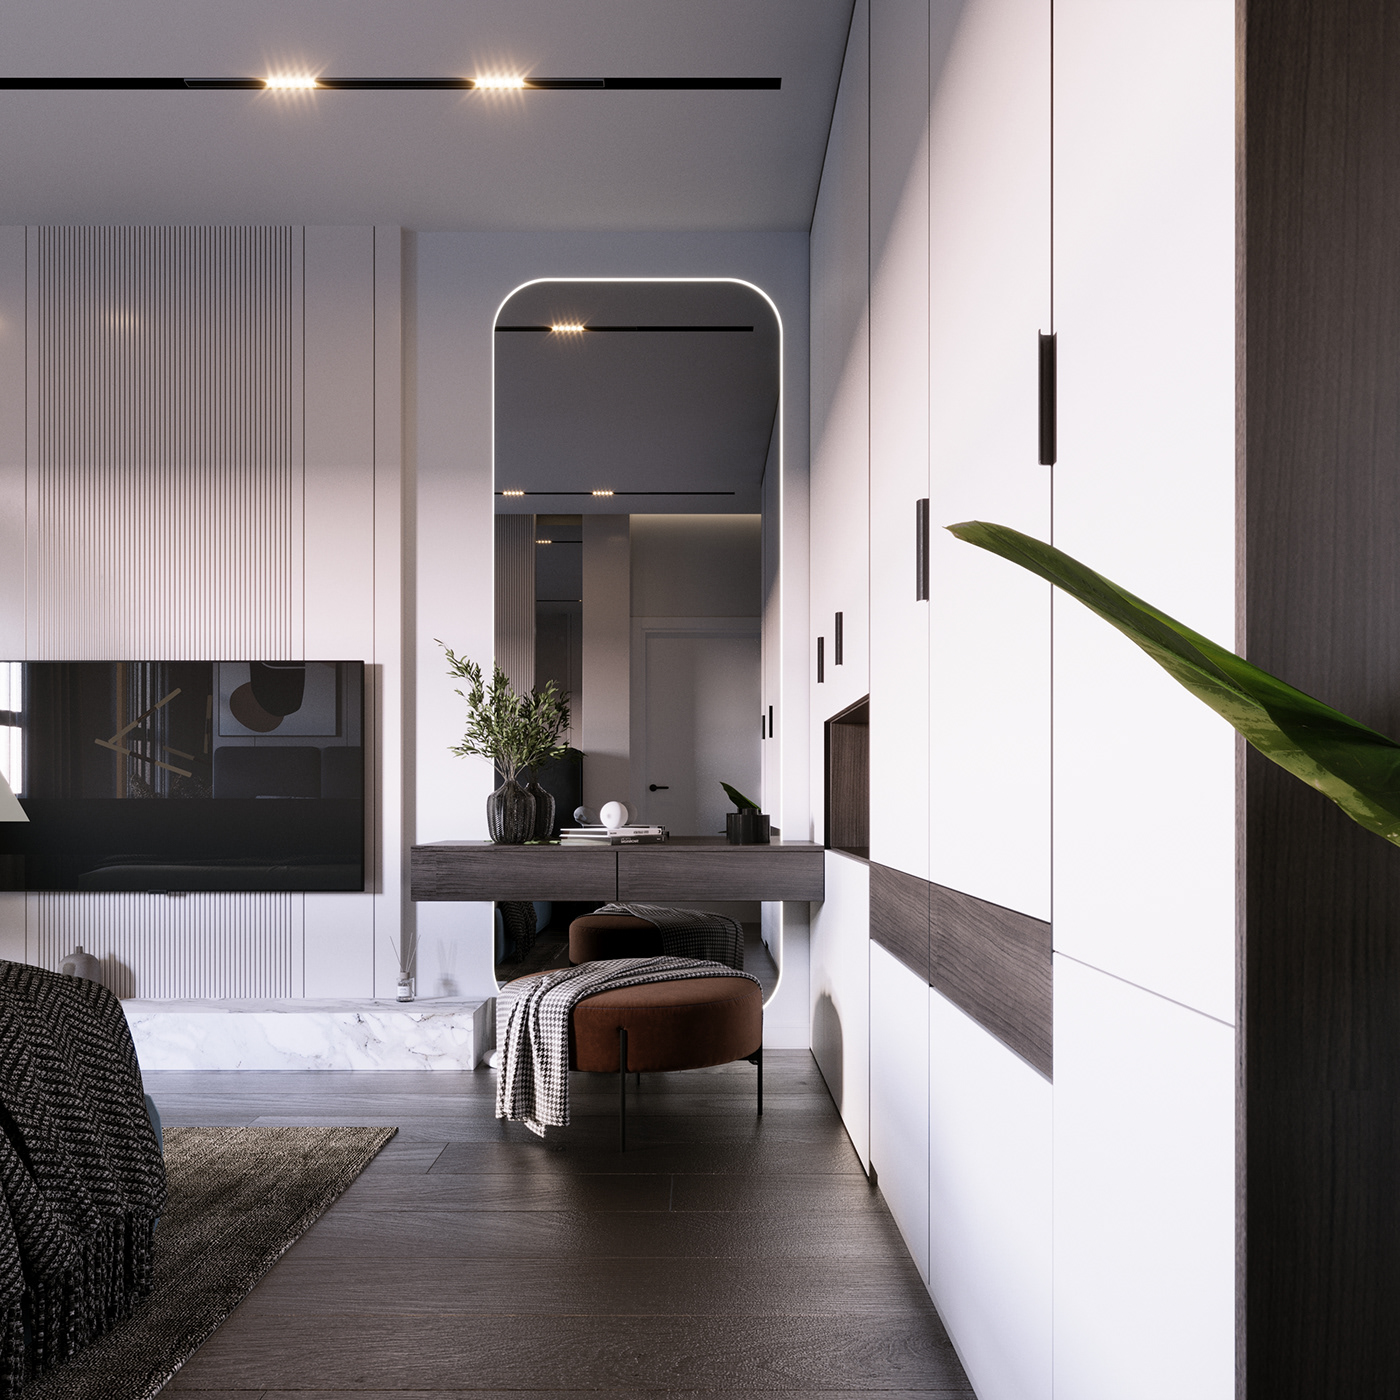 wall тв Tv unit tv design bedroom interior design  modern Render 3D 3ds max